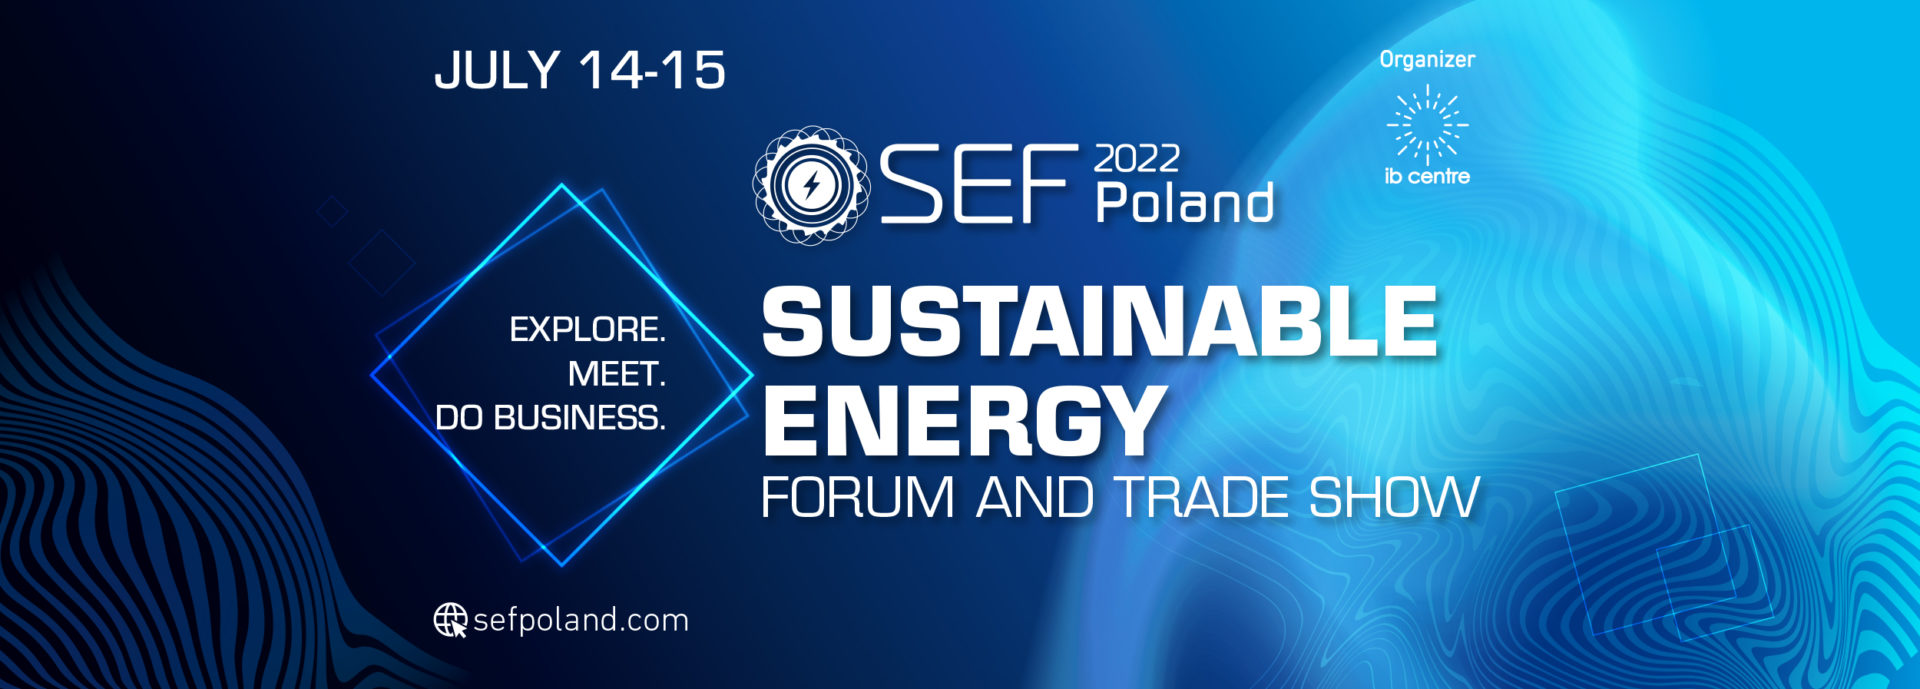 SEF Poland 2022 Zrównoważona Energia Forum i Targi • ekoetos.pl